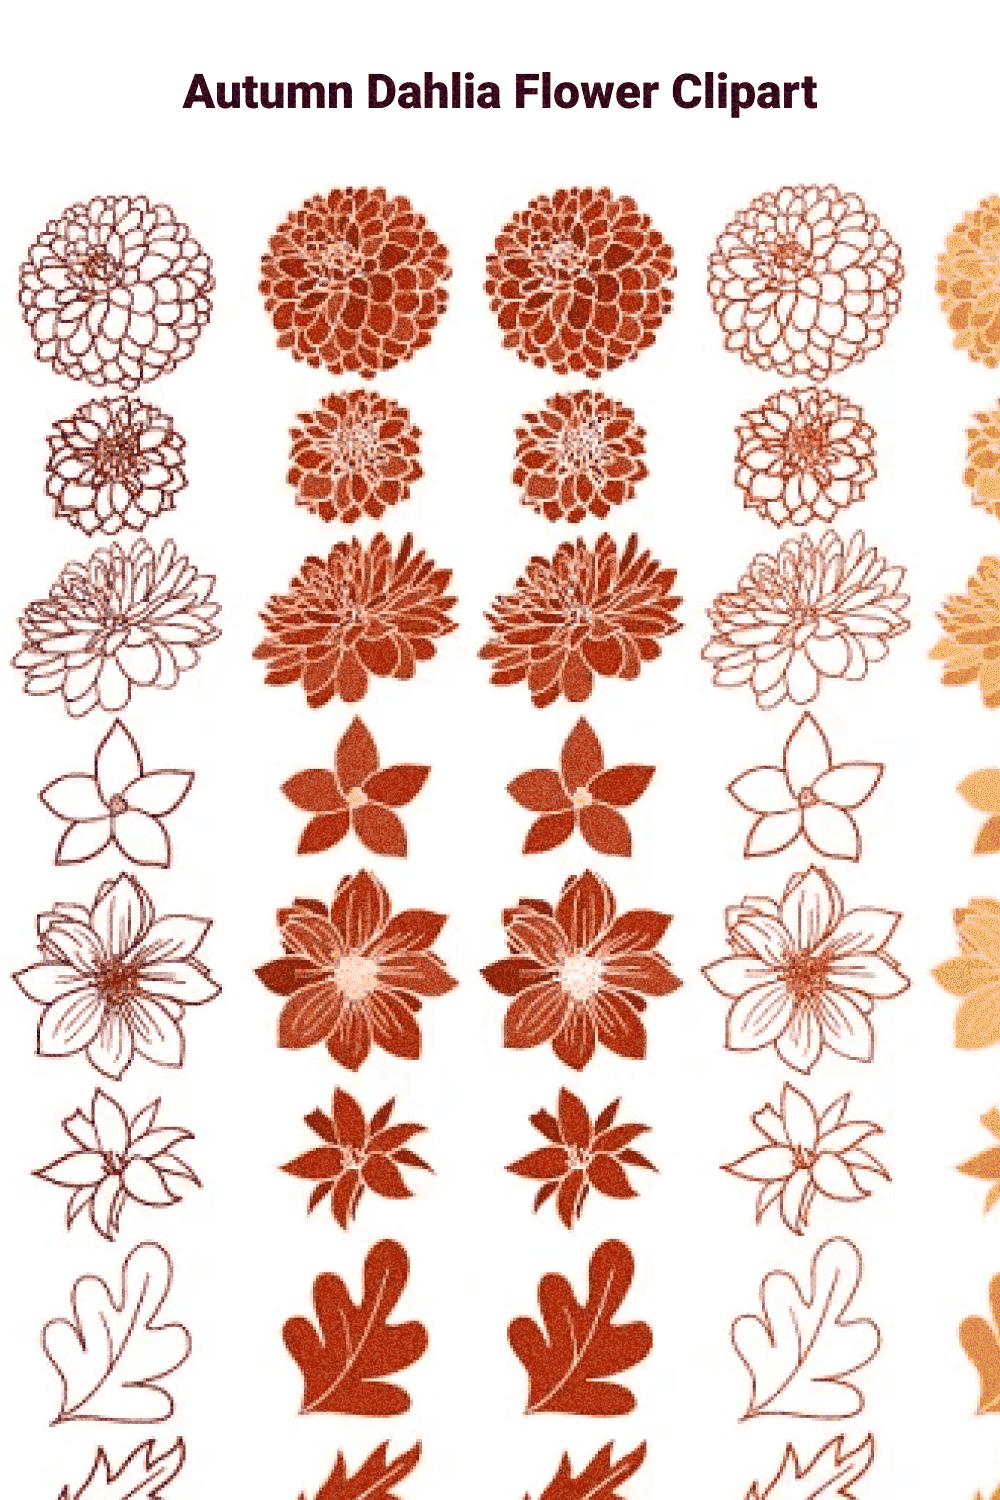 Autumn Dahlia Flower Clipart - Pinterest Image.